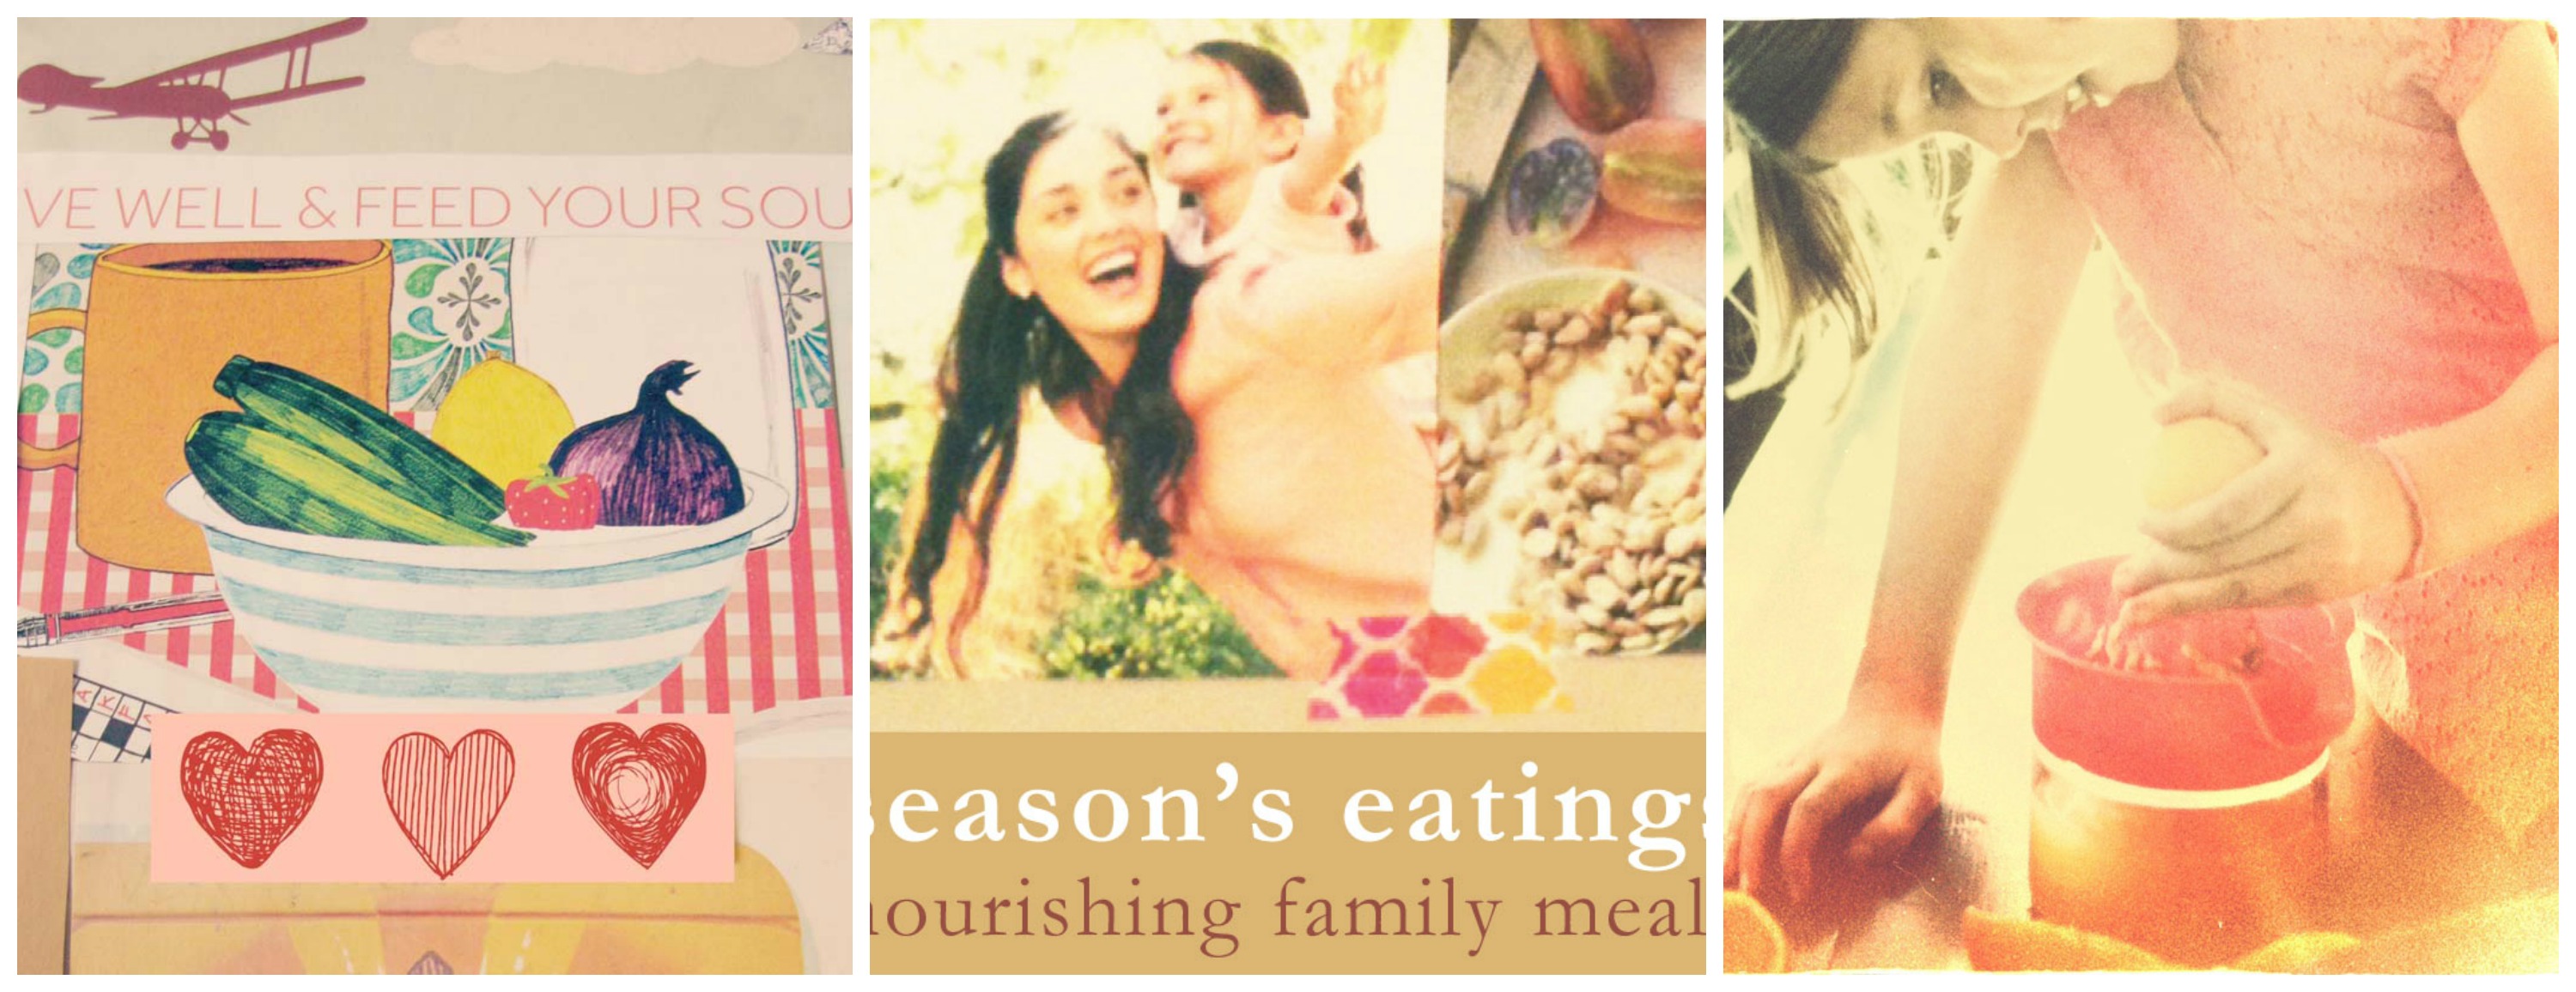 seasons eating collage